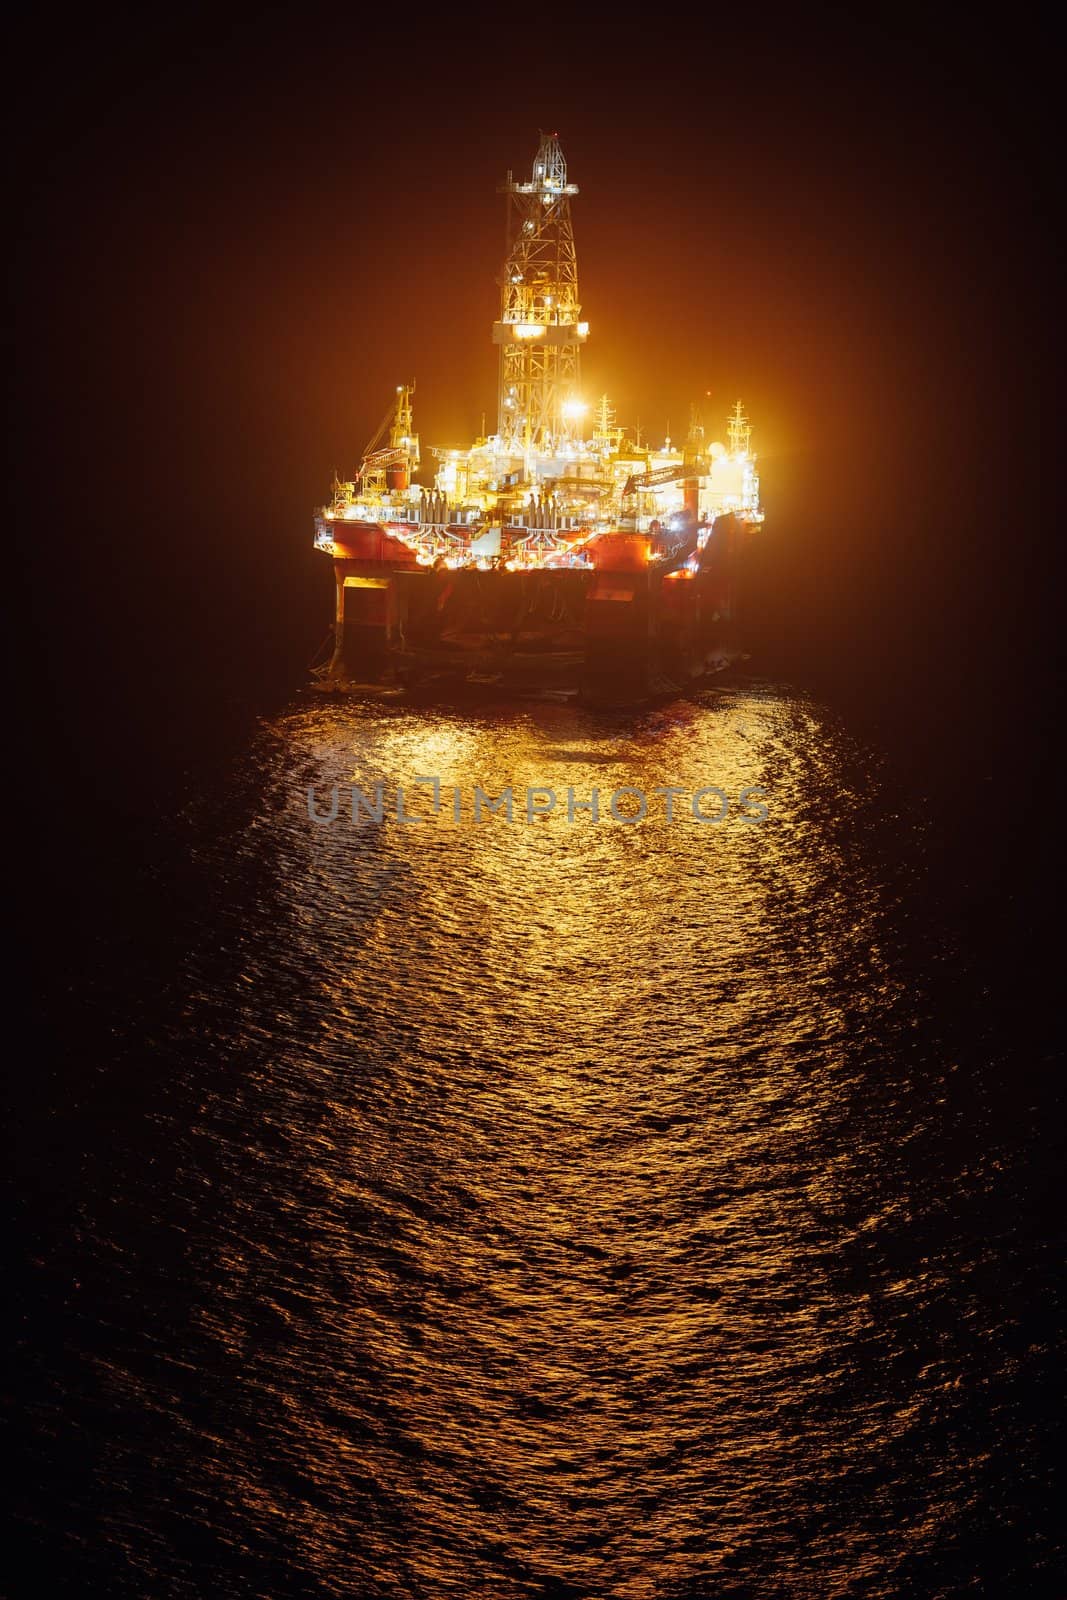 offshore oil platform at night